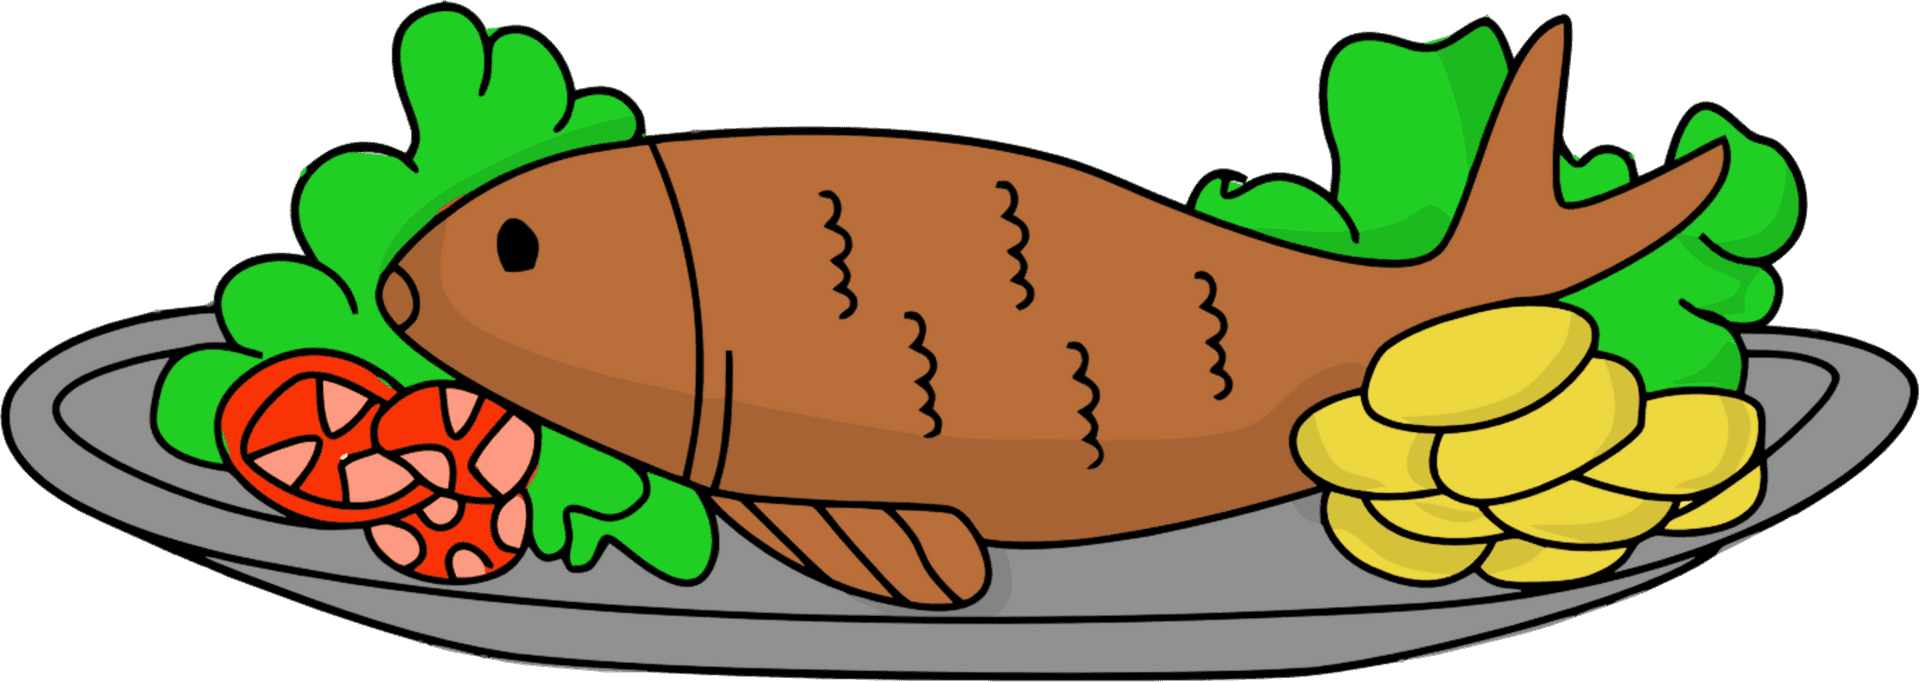 Cartoon Fish Dinner Plate PNG